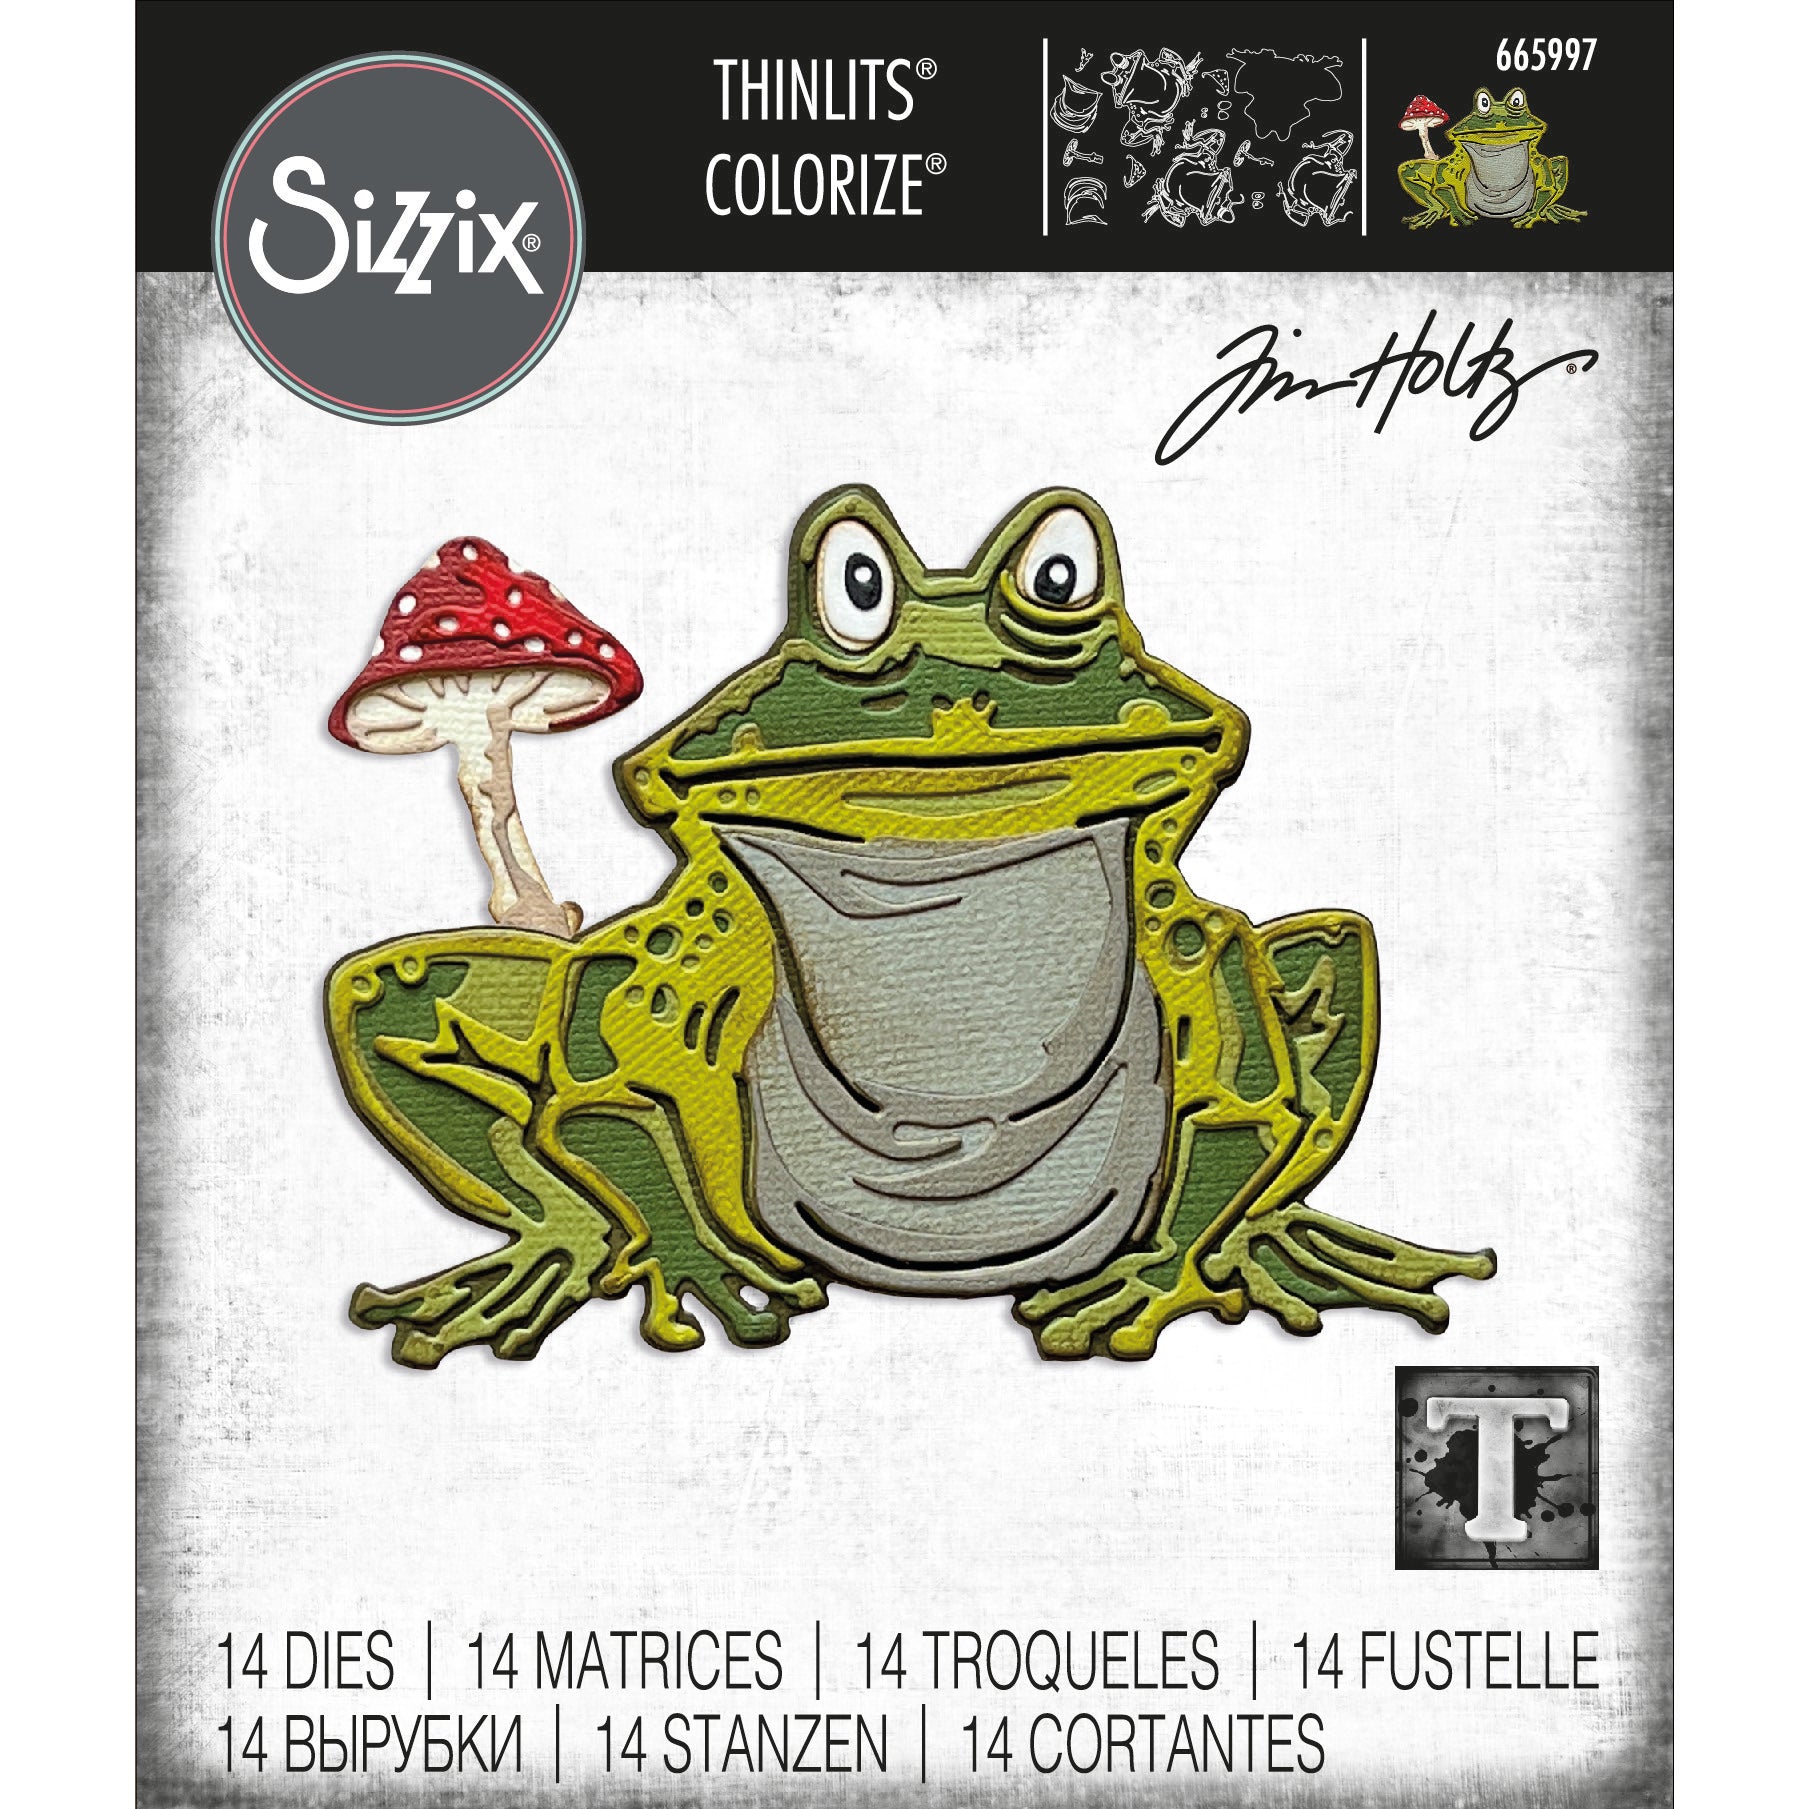 Sizzix Thinlits Die Set: Myron Colorize, by Tim Holtz (665997)